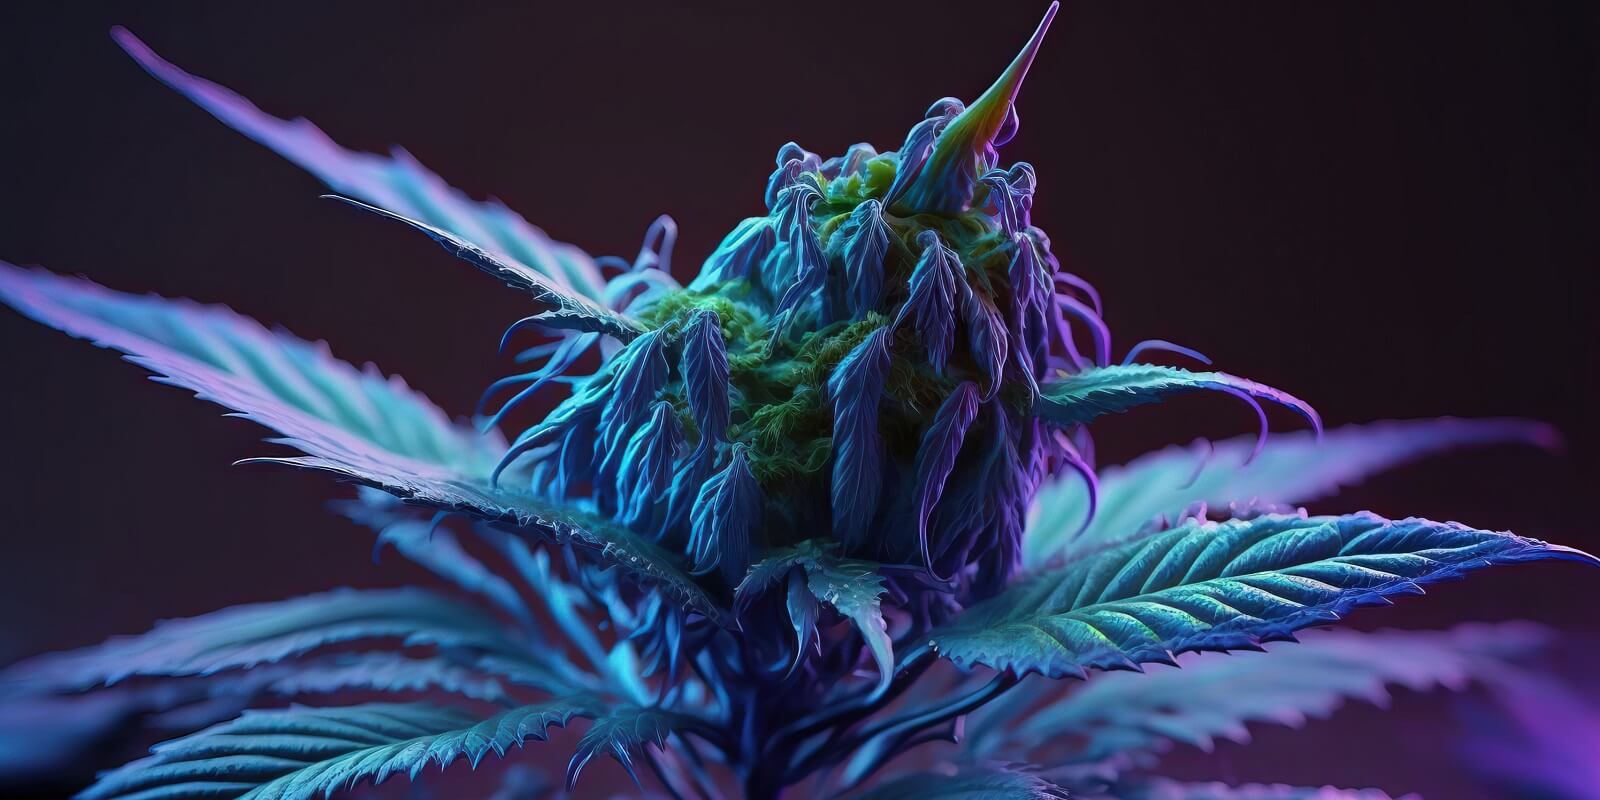 blue dream cannabis type is a purple marijuana plant bud